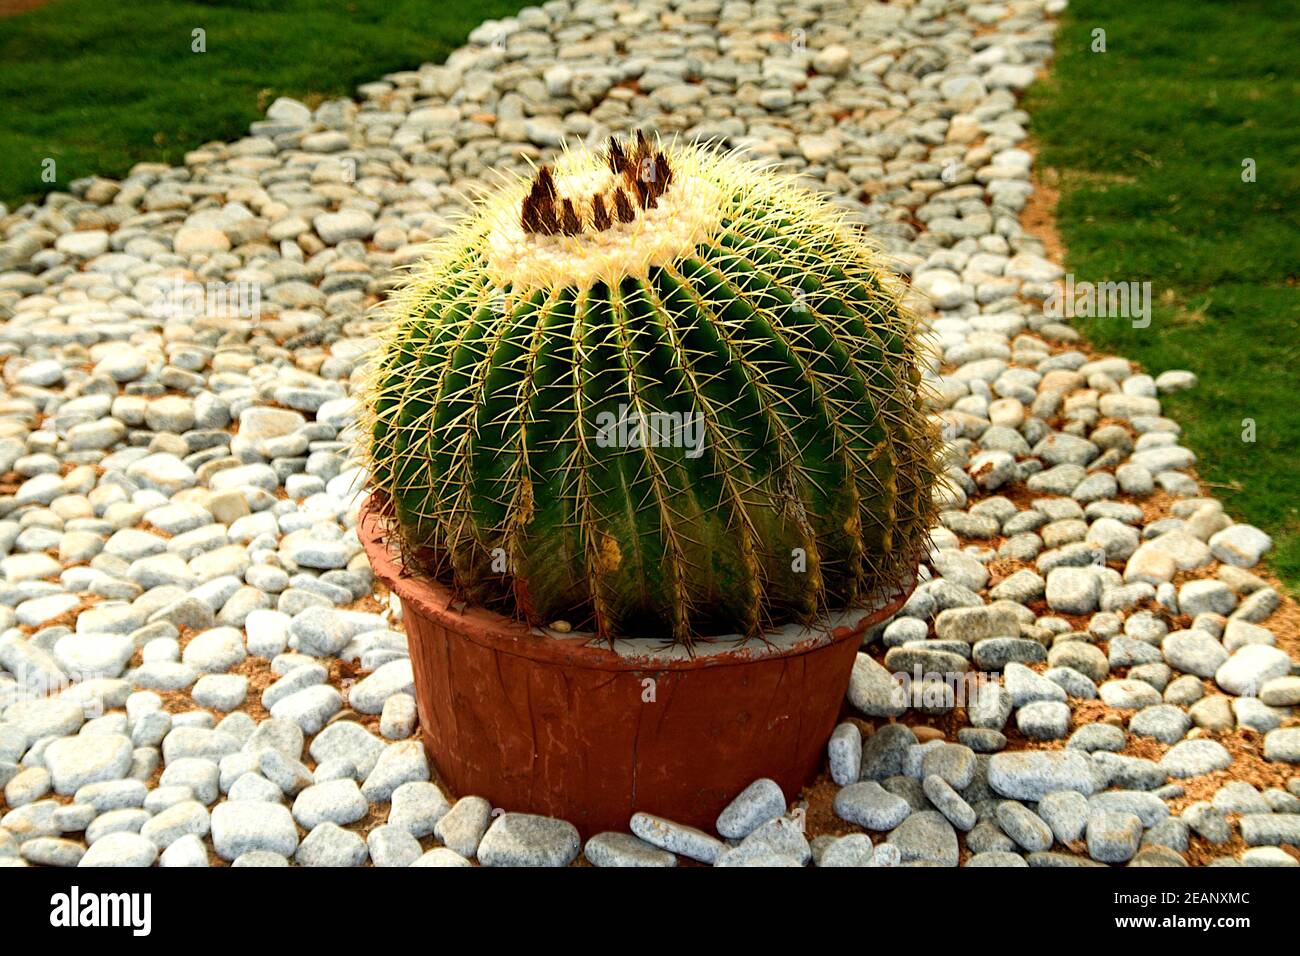 Cactus Plant in Earthen Pot Stock Photo